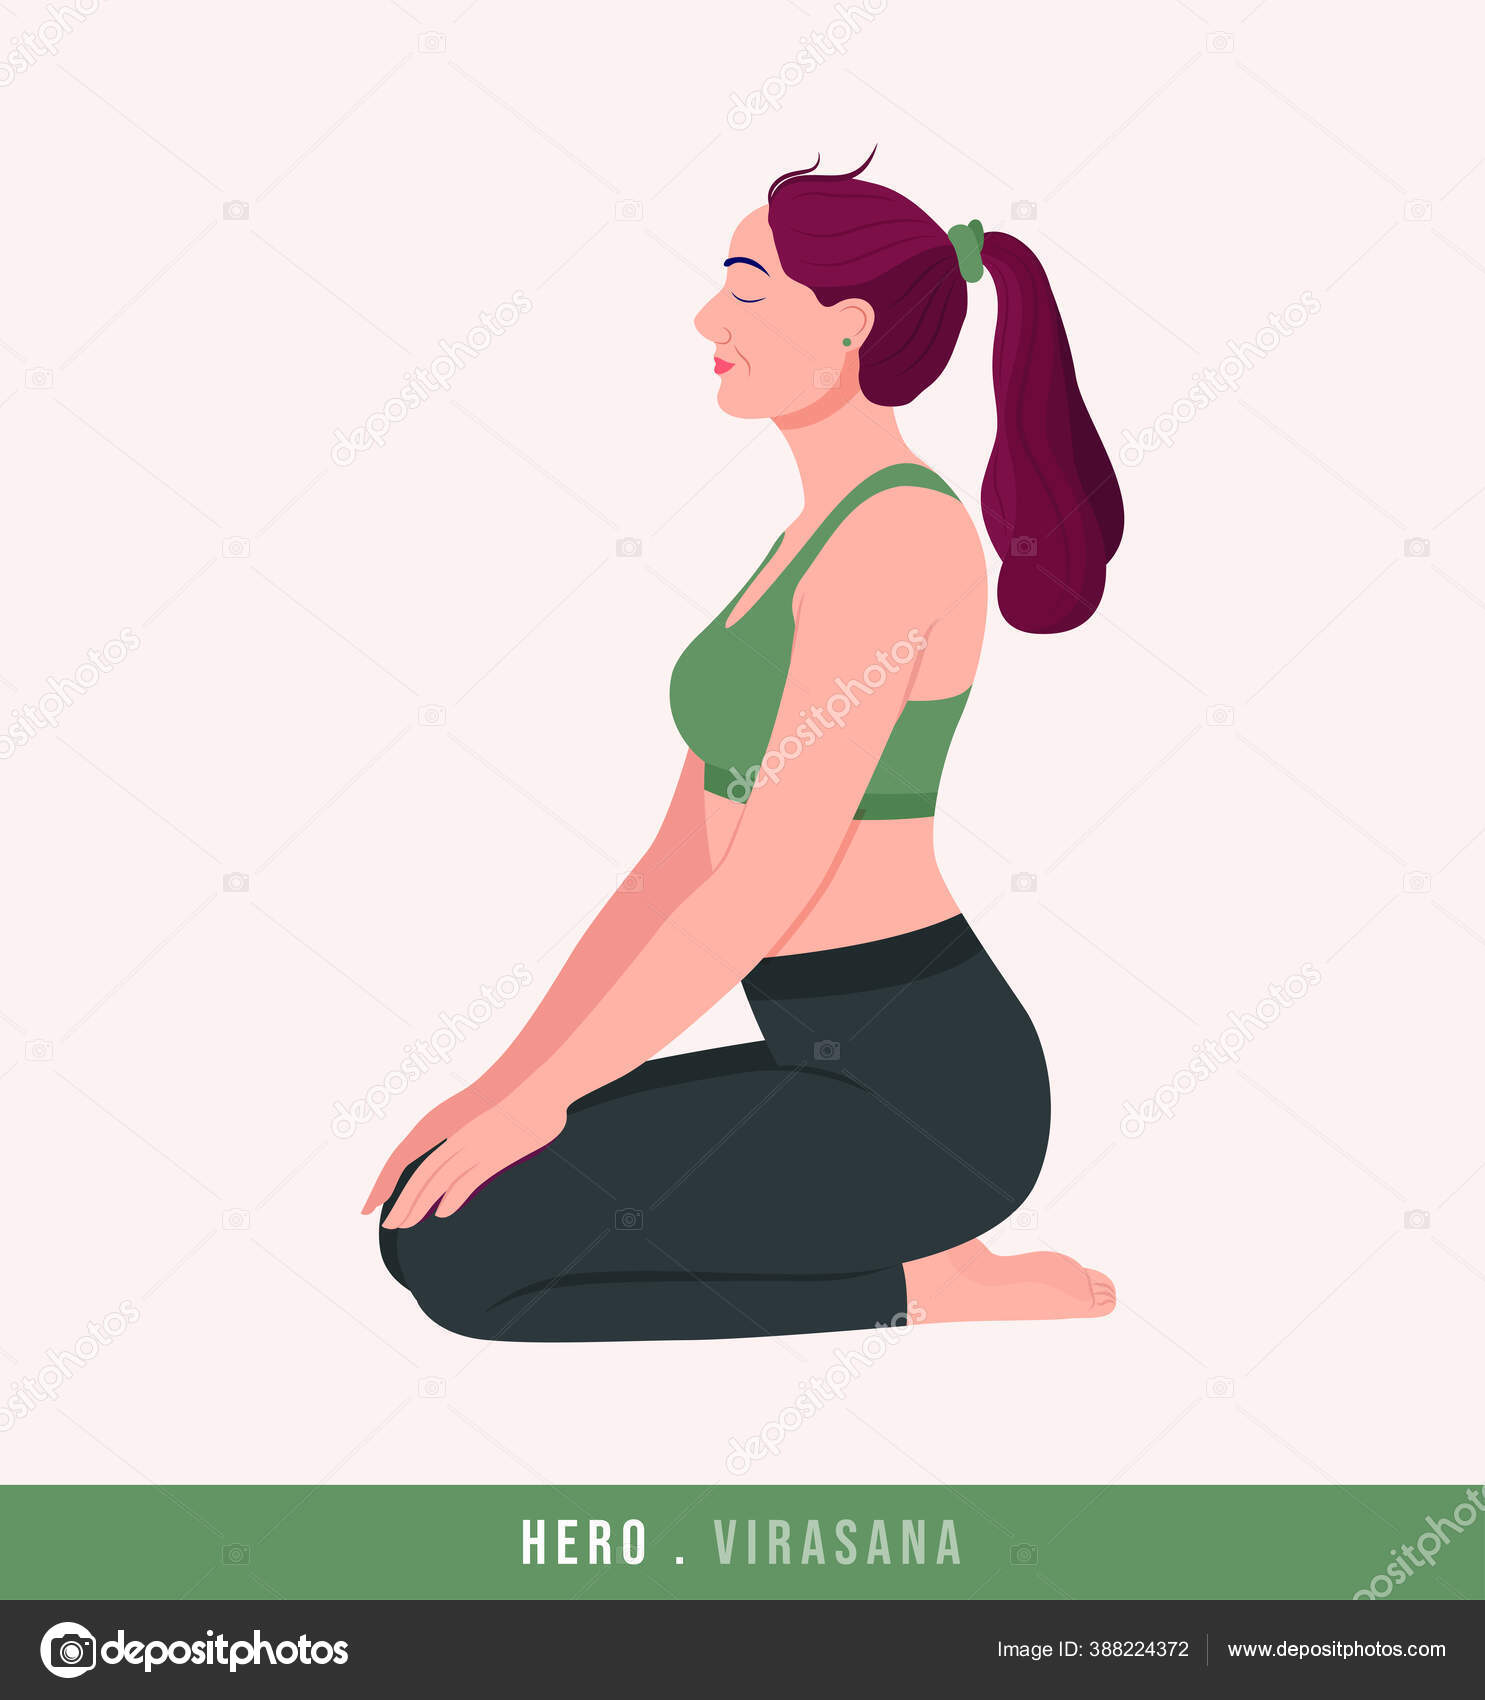 Hero pose: Benefits and how to do Virasana | HealthShots